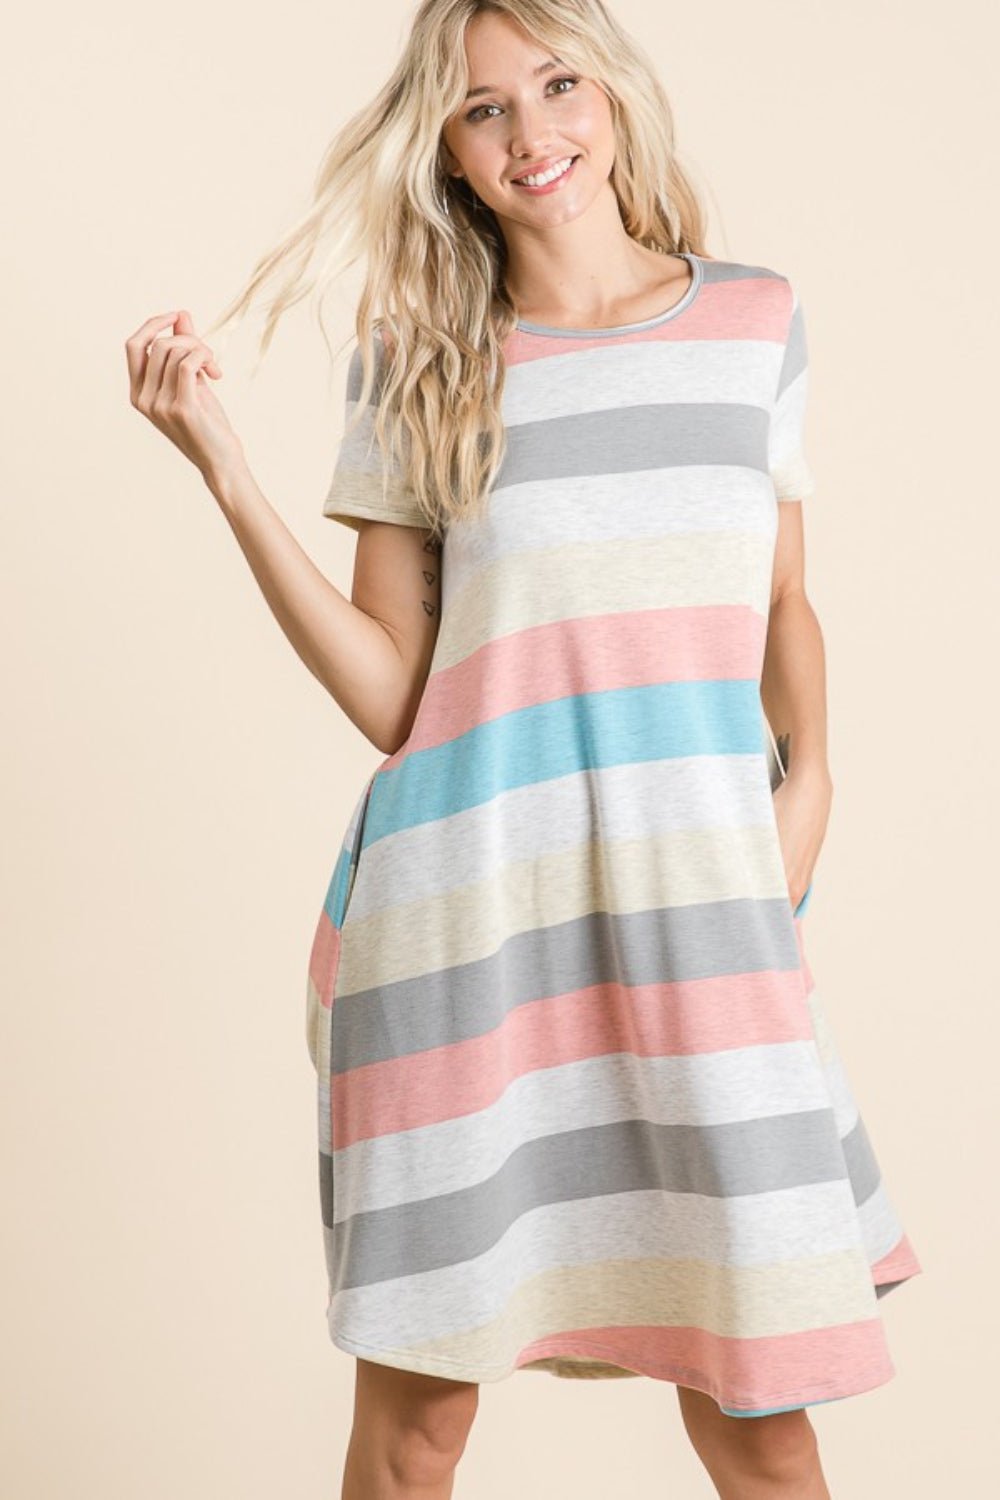 Striped Short Sleeve Mini Dress with PocketsMini DressBOMBOM